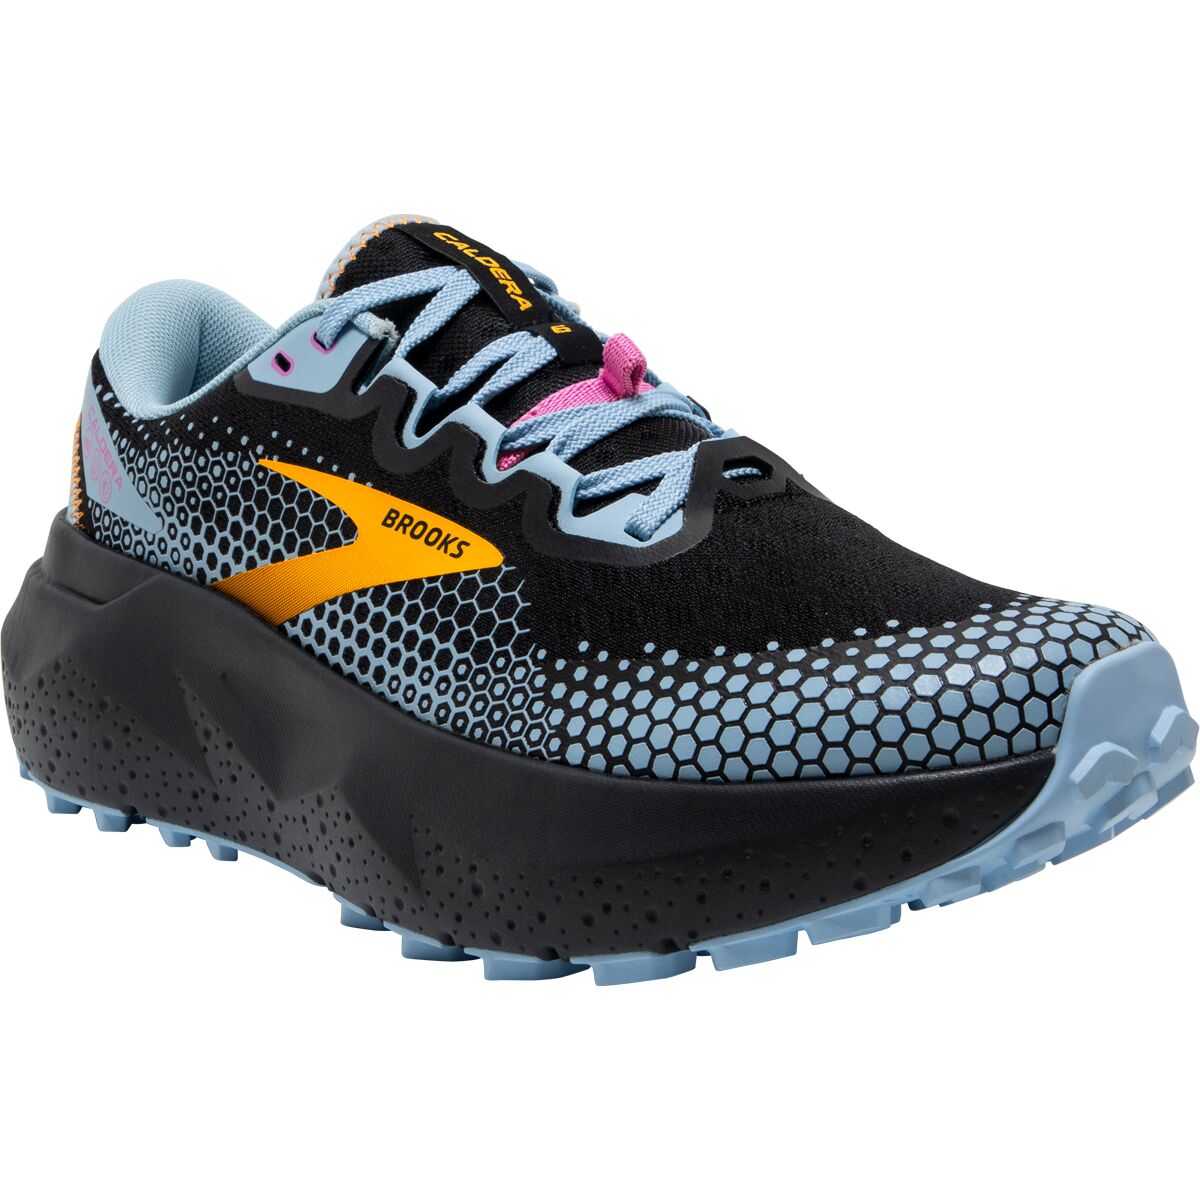 Brooks Caldera 6 Trail Running Shoe - Women's - Footwear